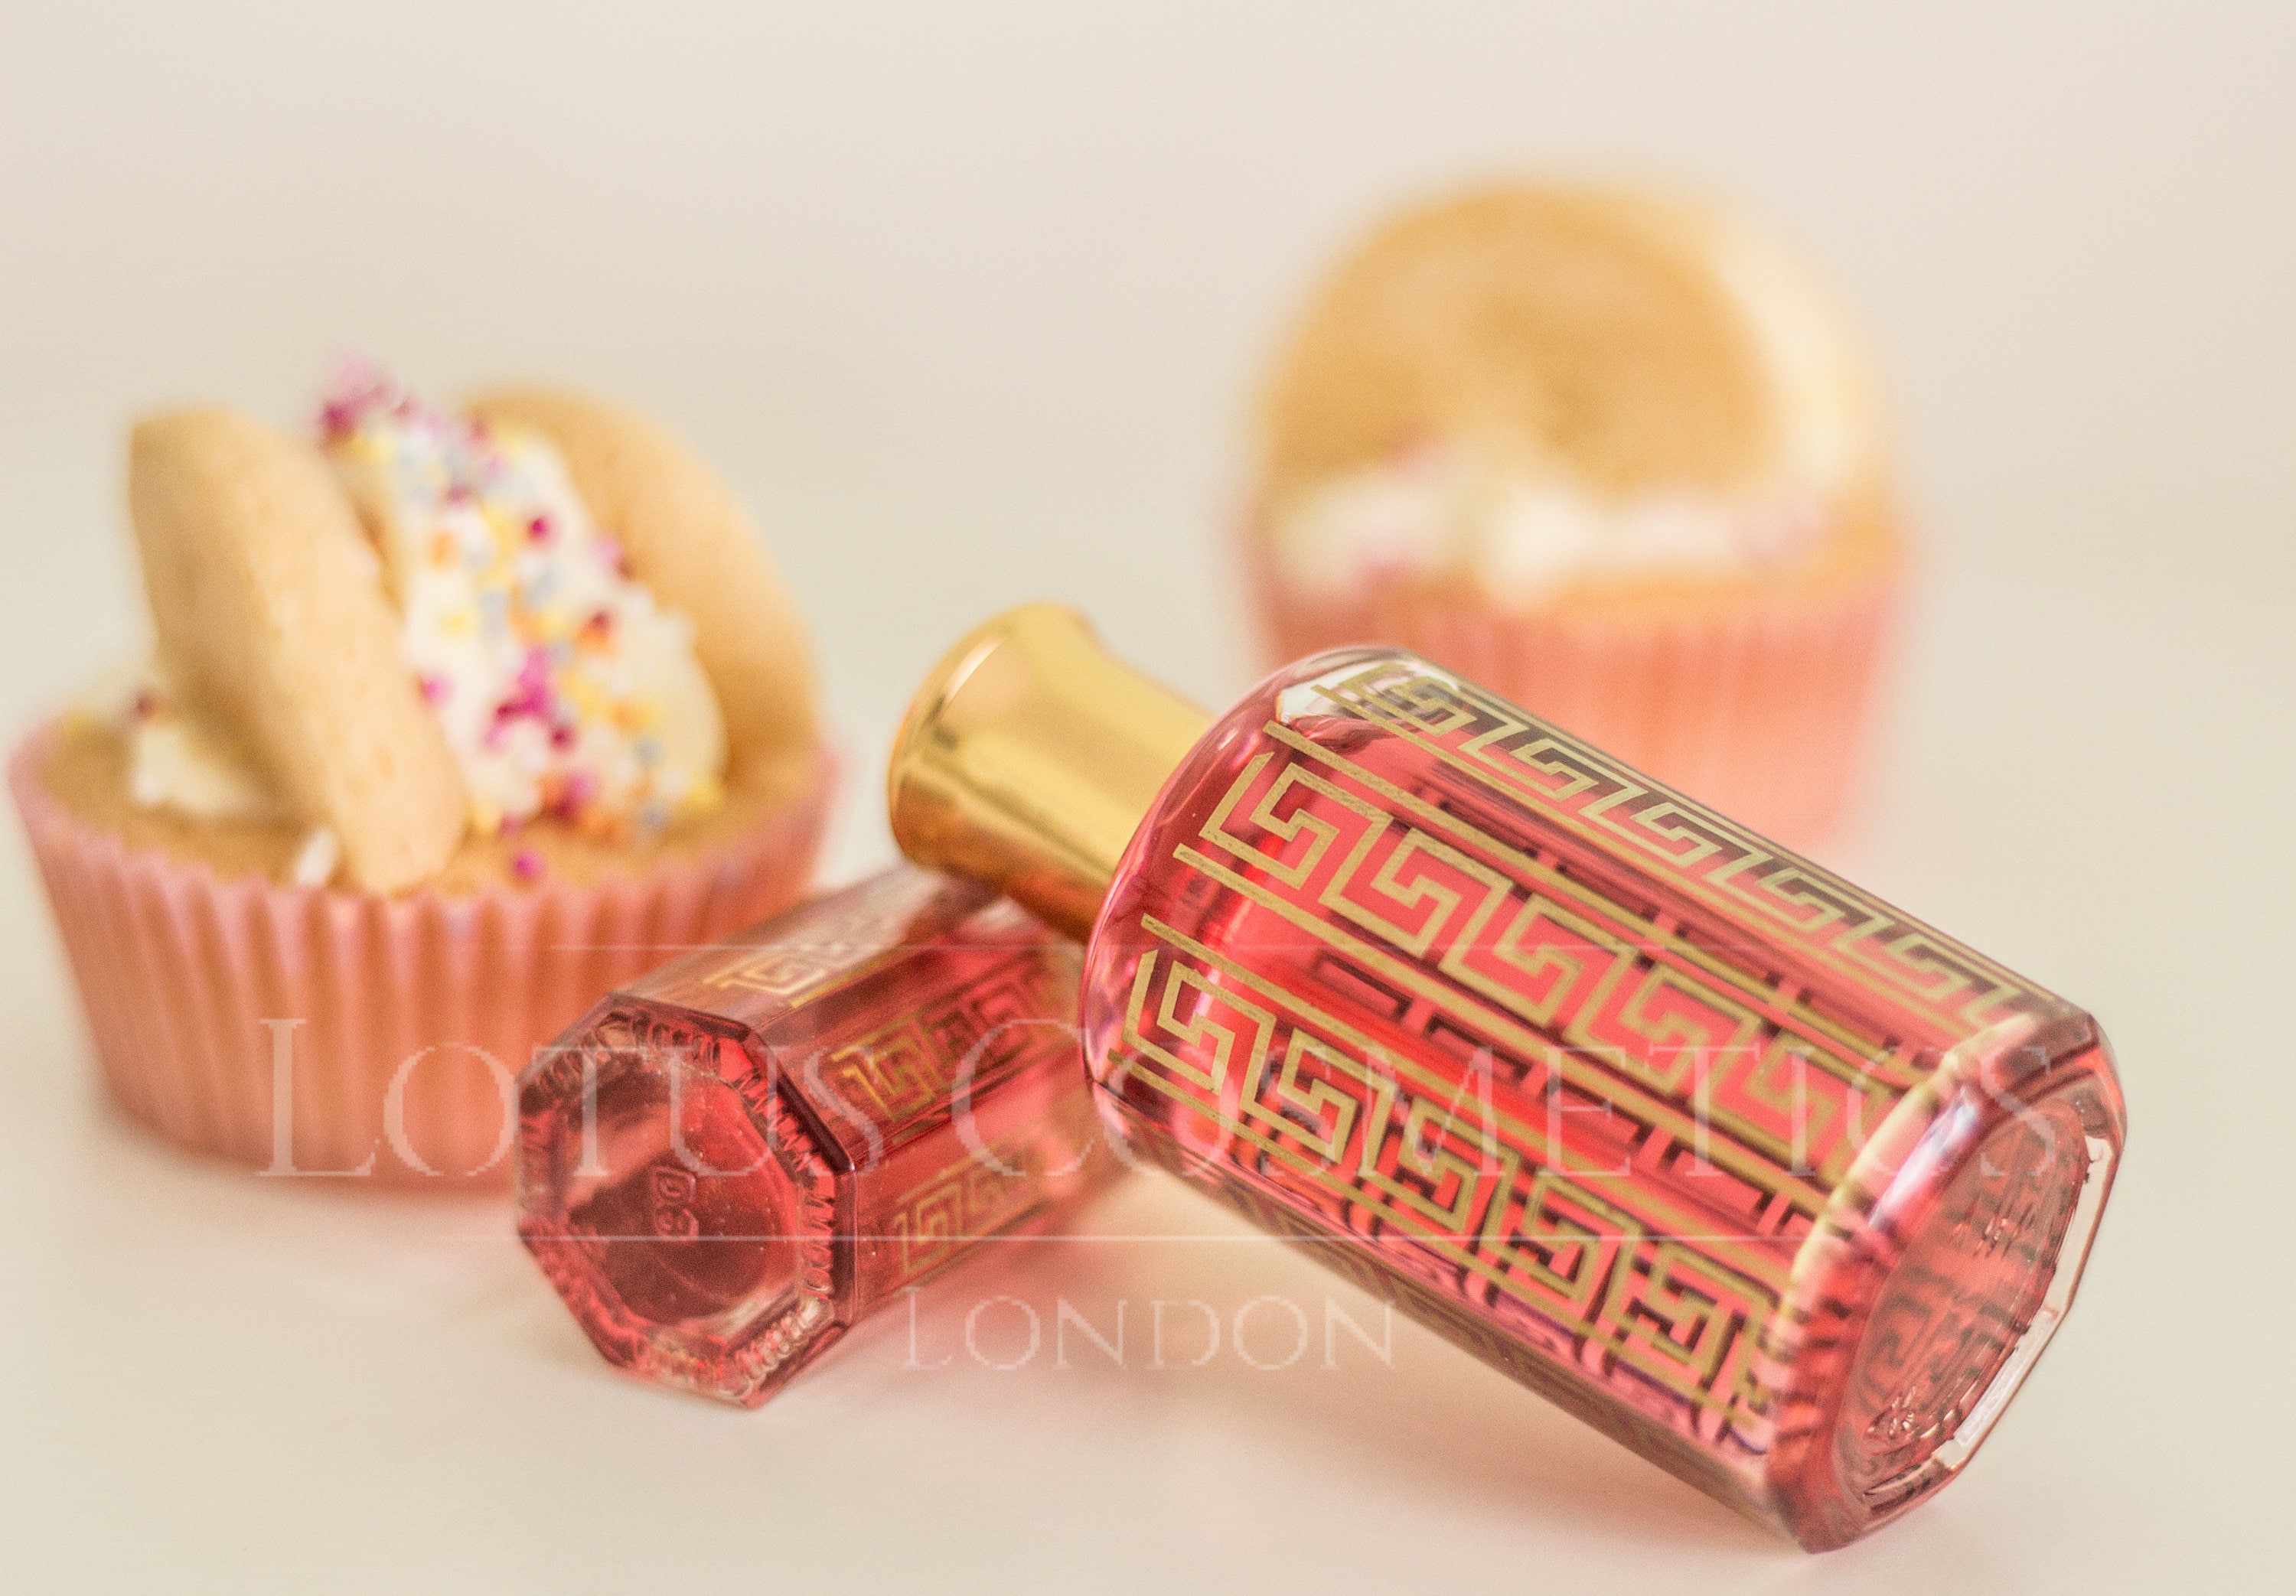  Pink Sugar Sugar Perfume Oil : Handmade Products